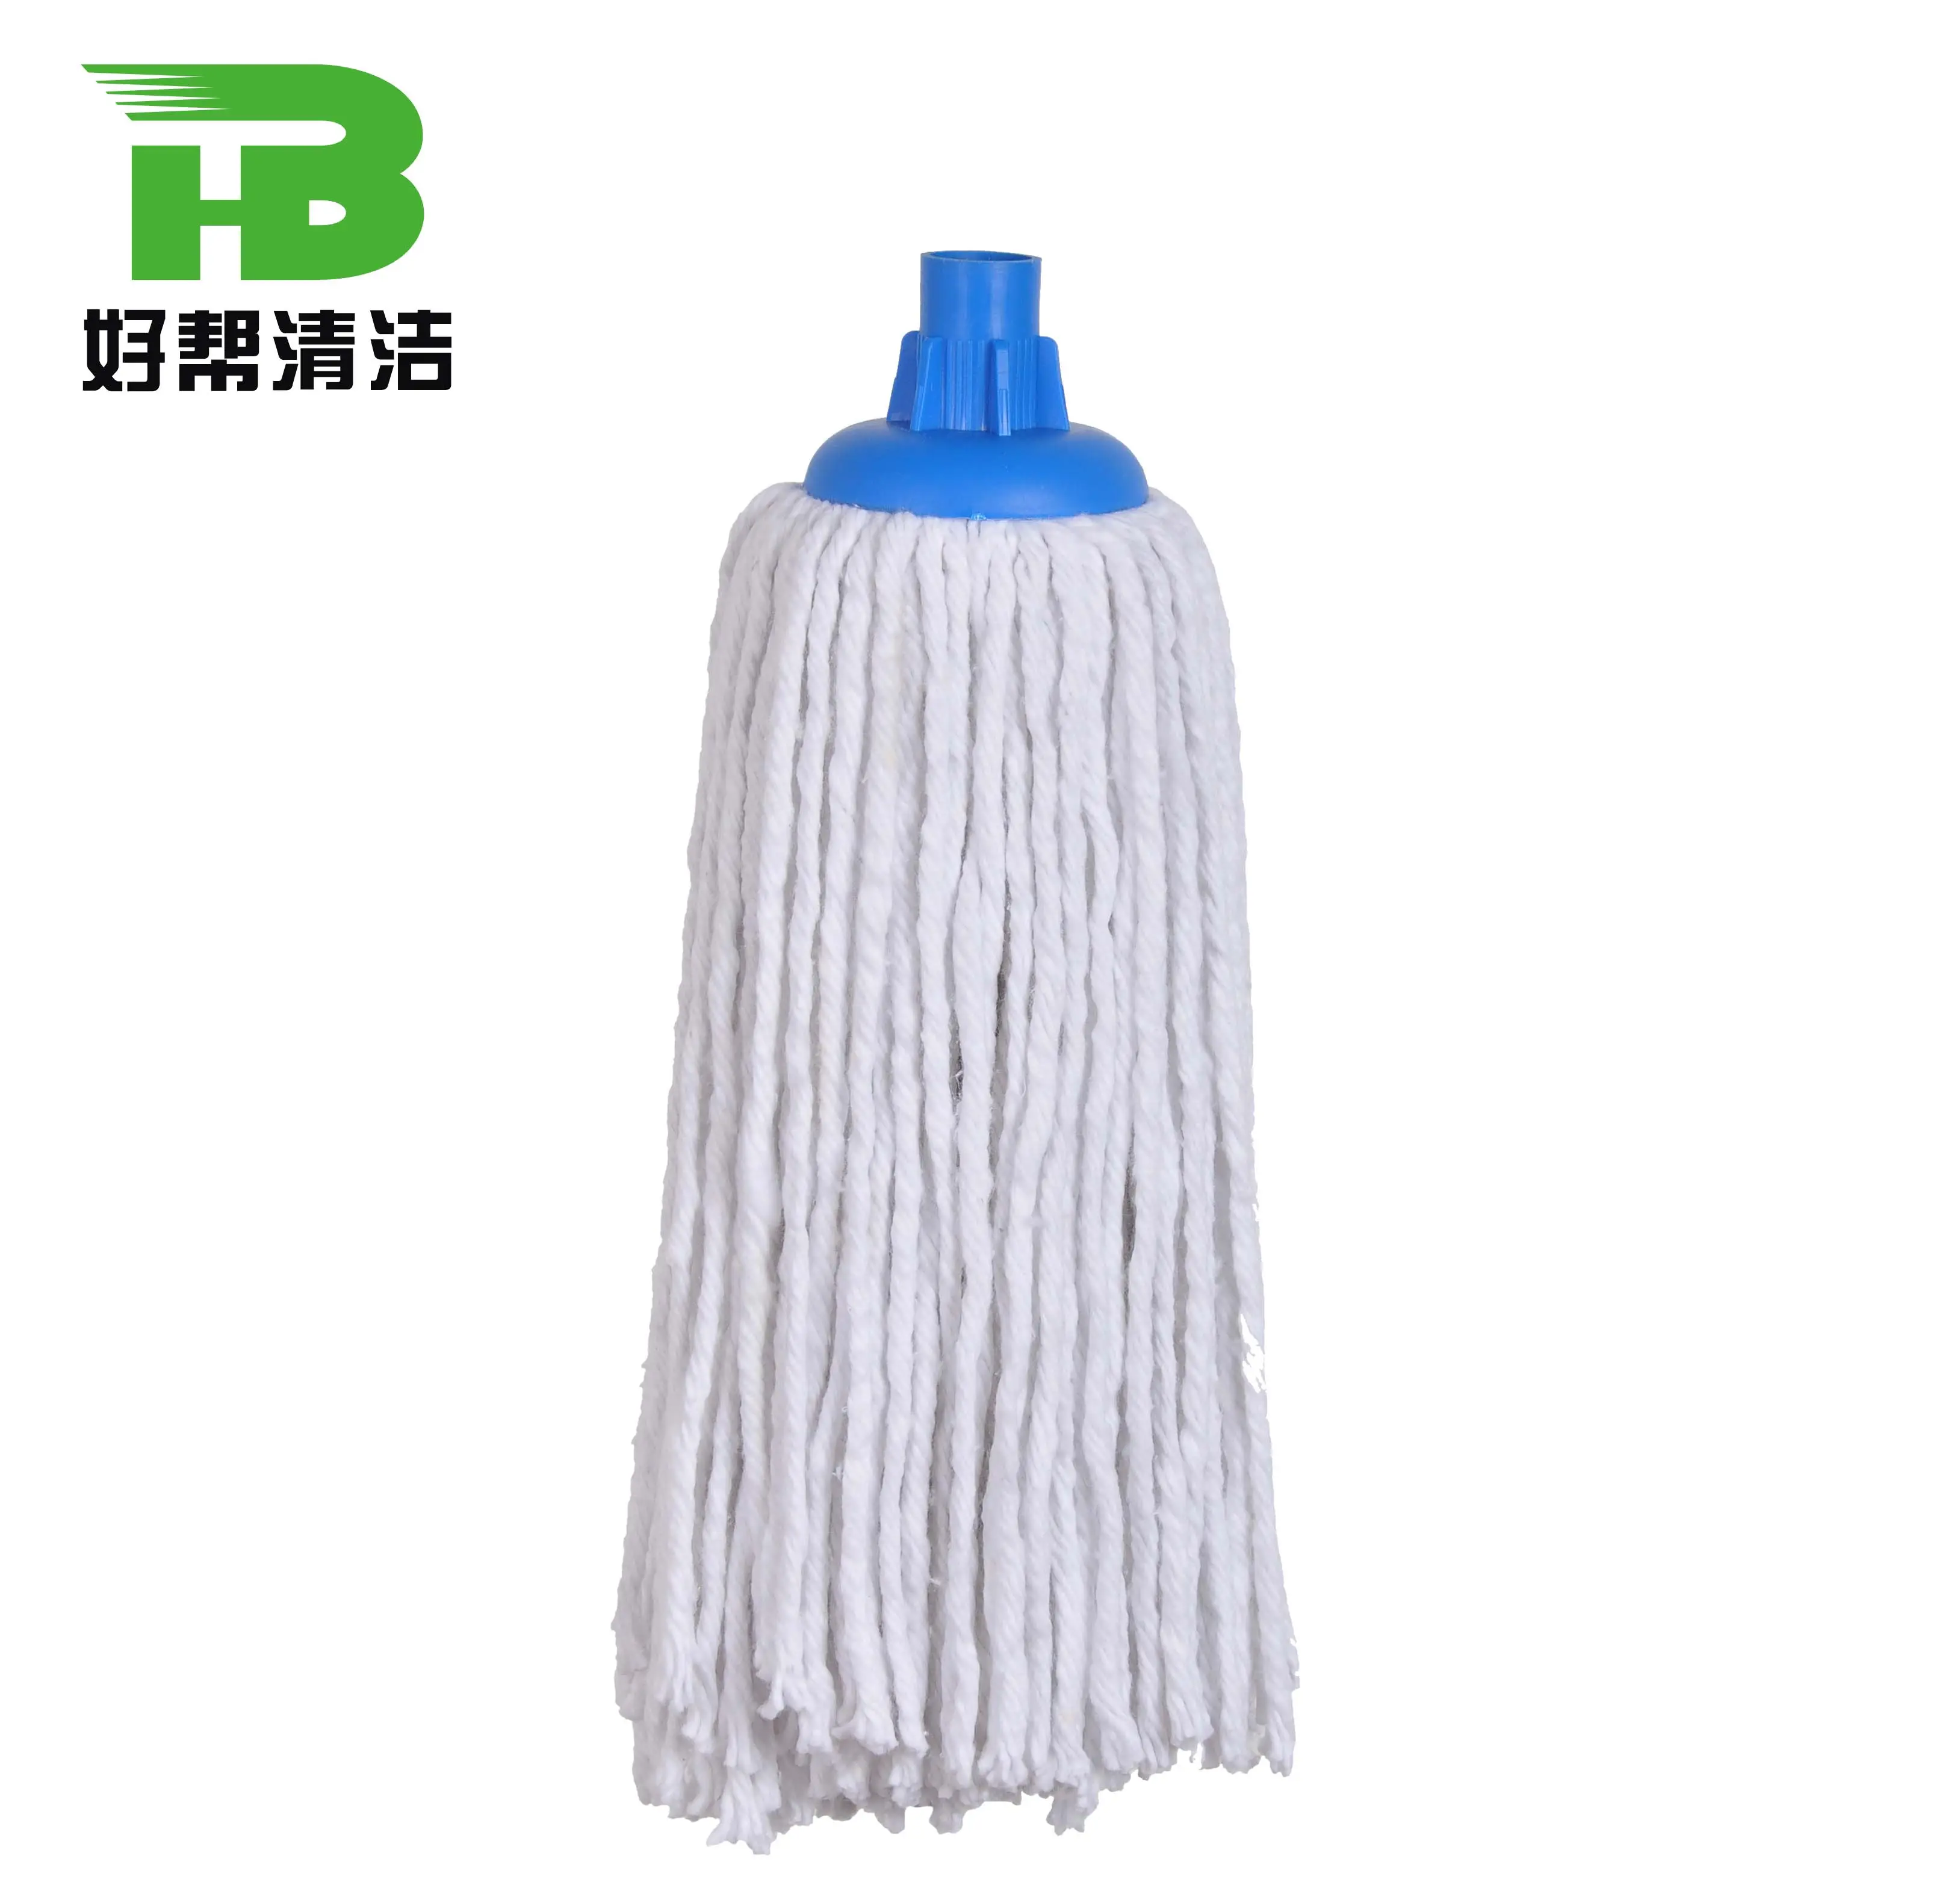 Fregona blanca de algodón reciclado, mopa con cabeza redonda de plástico azul, fricción